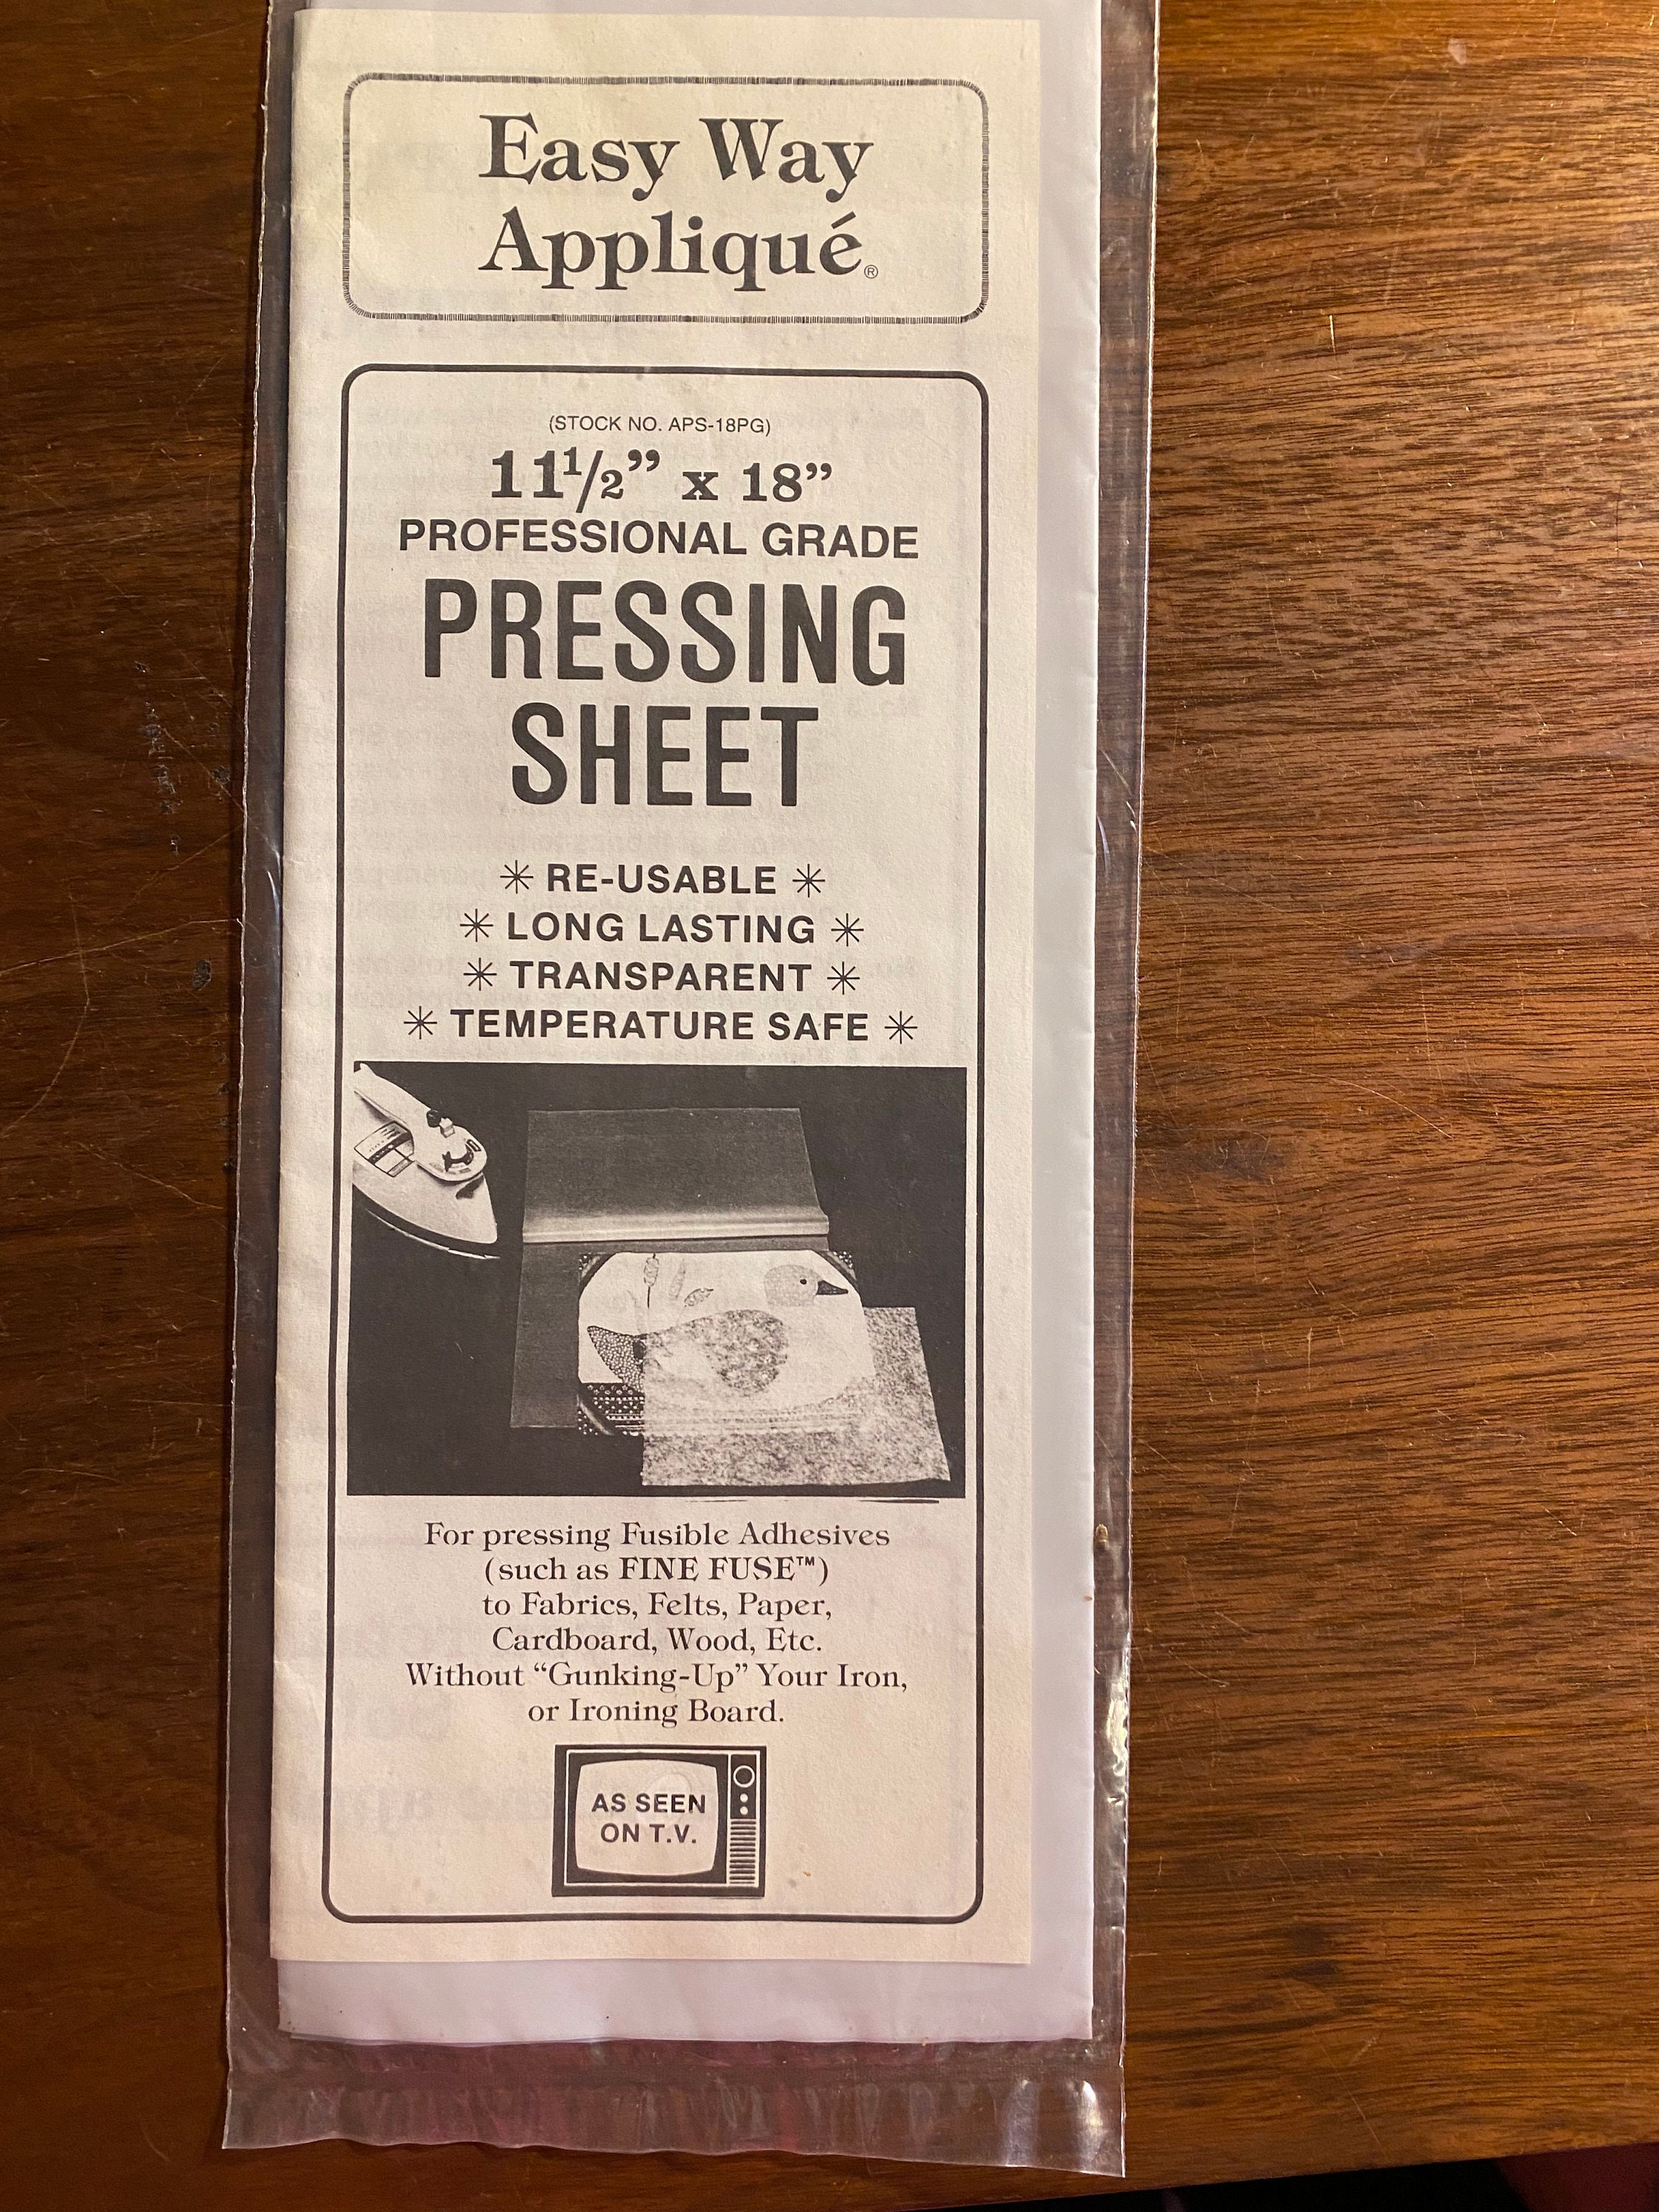 The Applique Pressing Sheet 13x17 to Iron On 